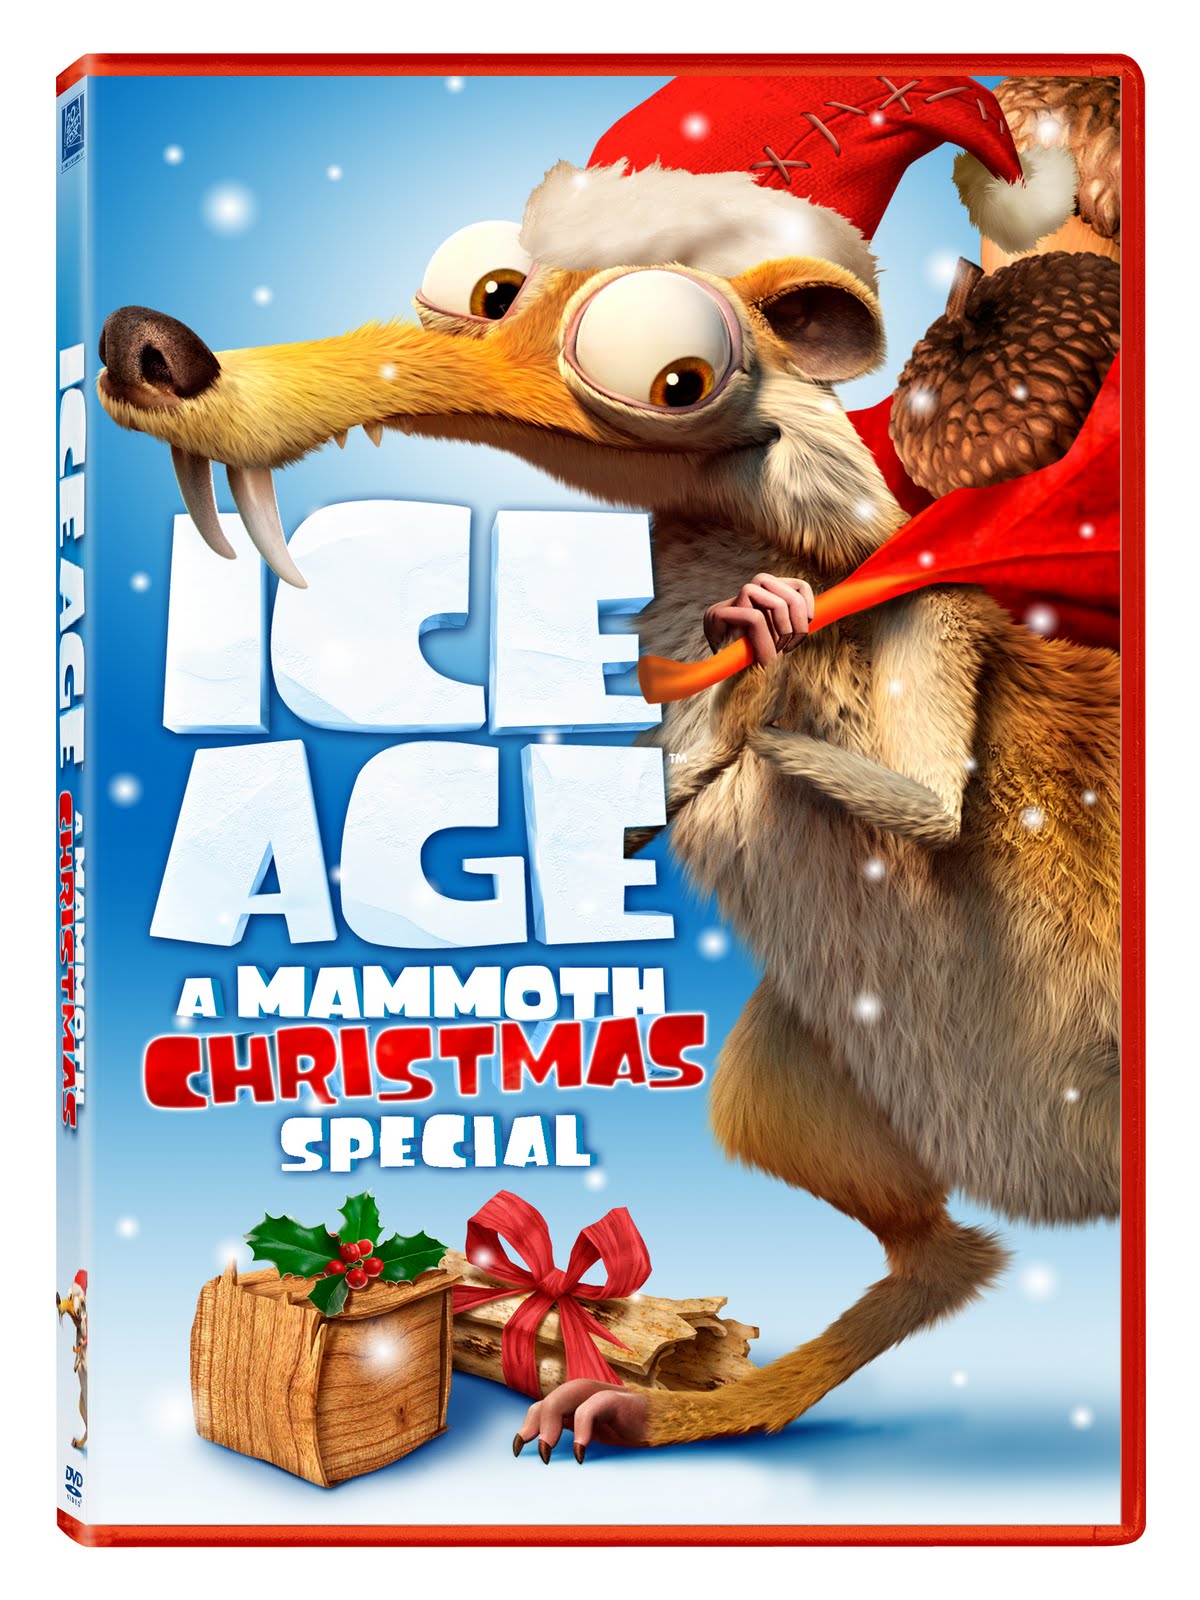 Jam Movie Reviews Jam Reviews Ice Age A Mammoth Christmas Special